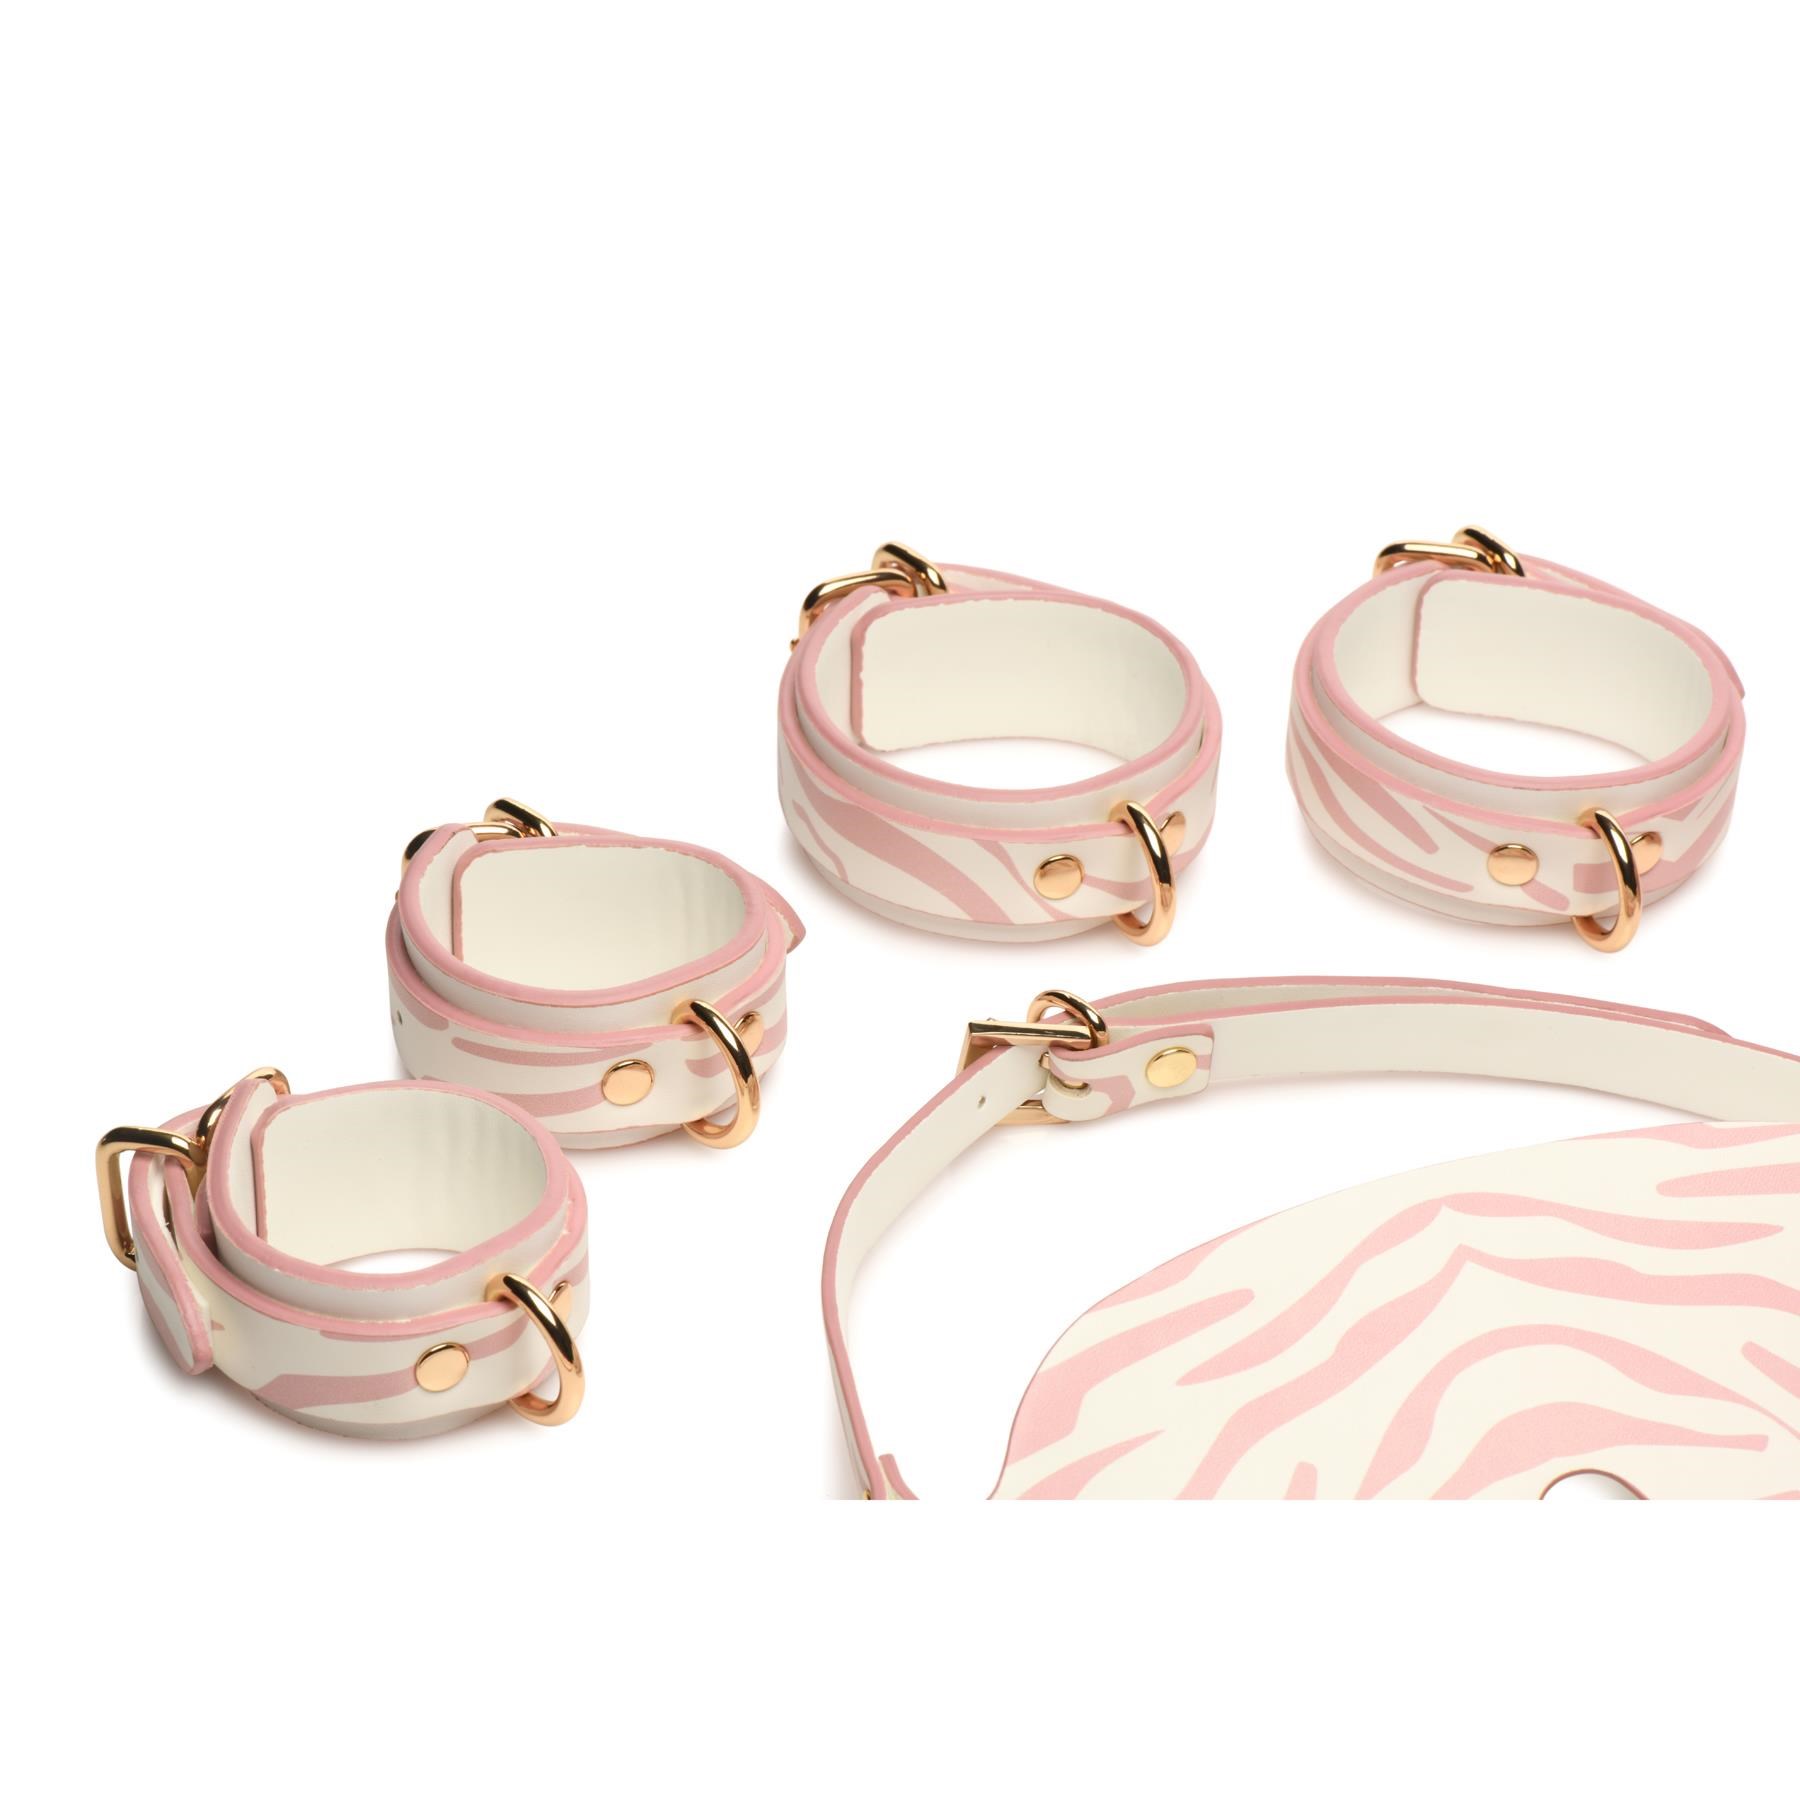 Master Series Pink Kitty Bondage Set - Cuffs and Blindfold